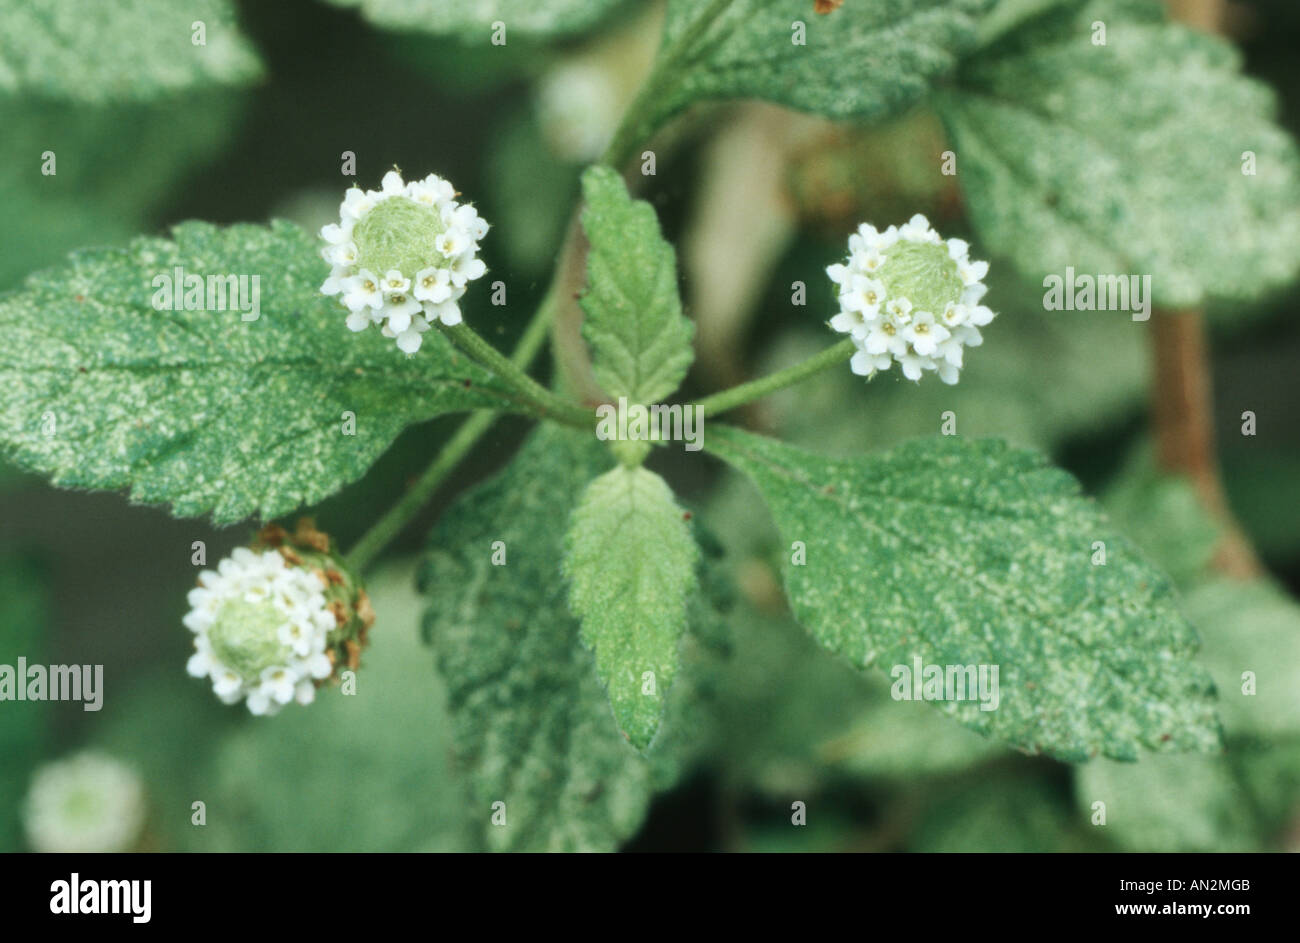 aztec sweet herb (Lippia dulcis, Phyla scaberrima), blooming plant Stock Photo